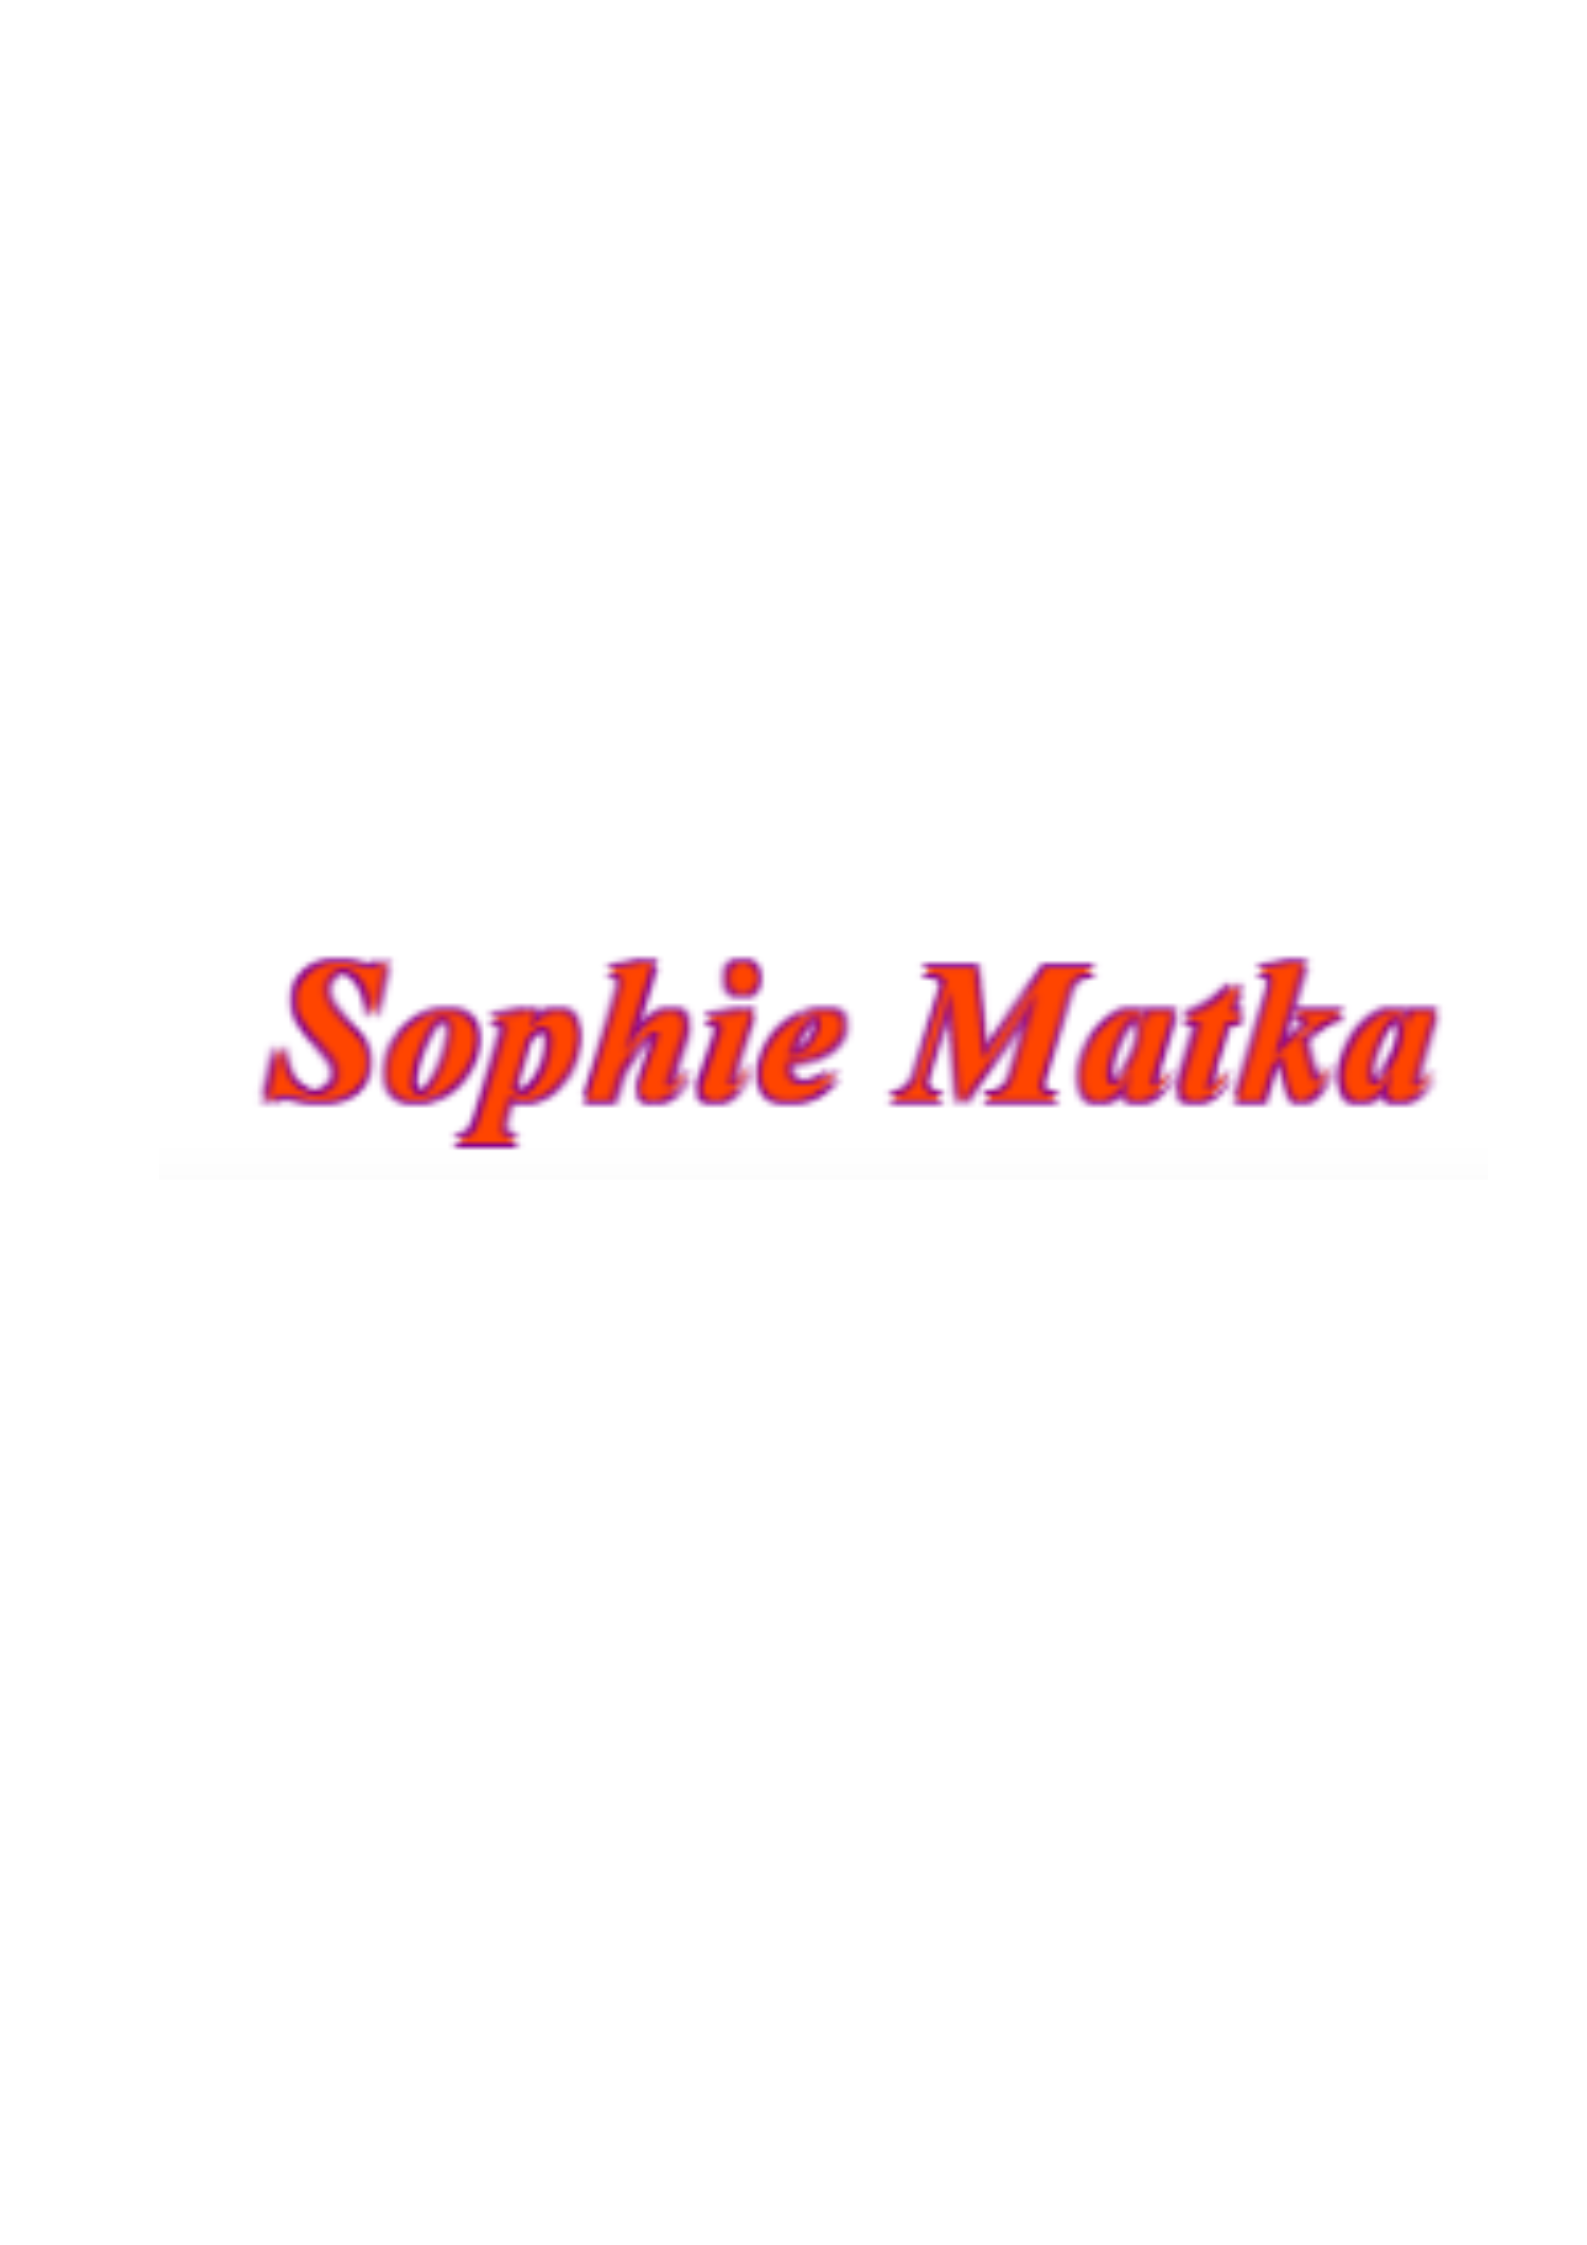 Sophiematka | ArchDaily